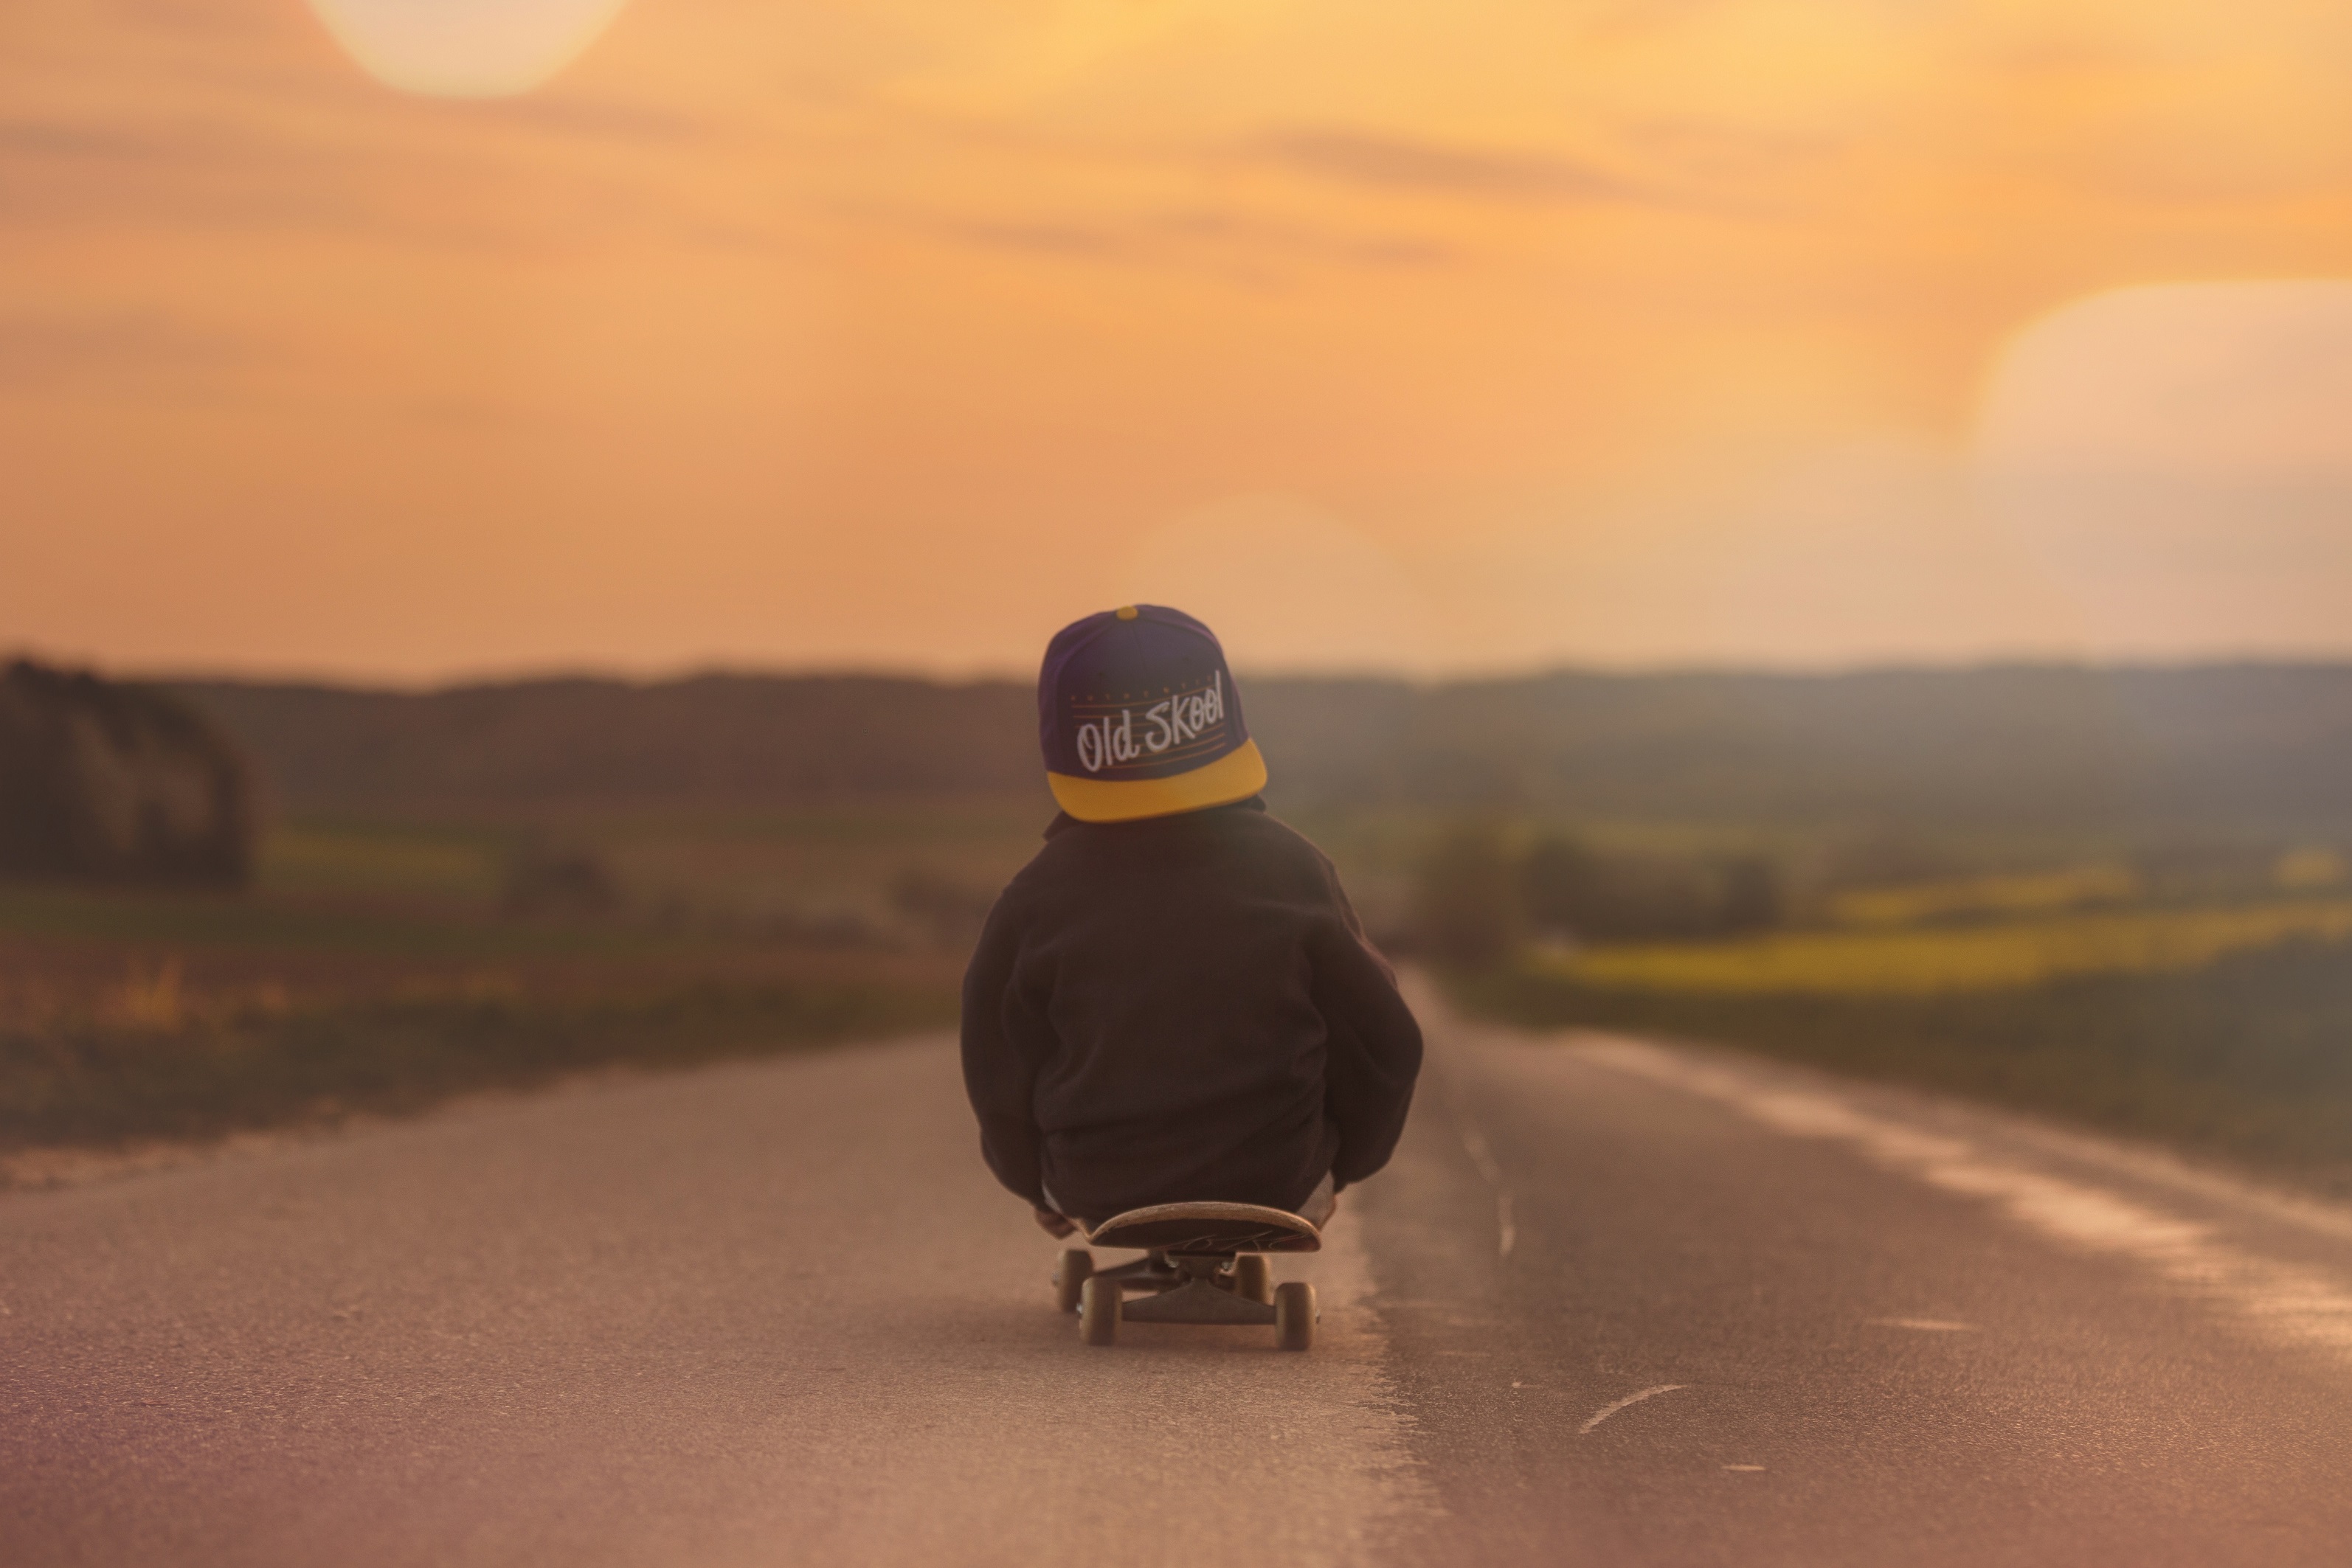 photography, child, hat, road, skateboard